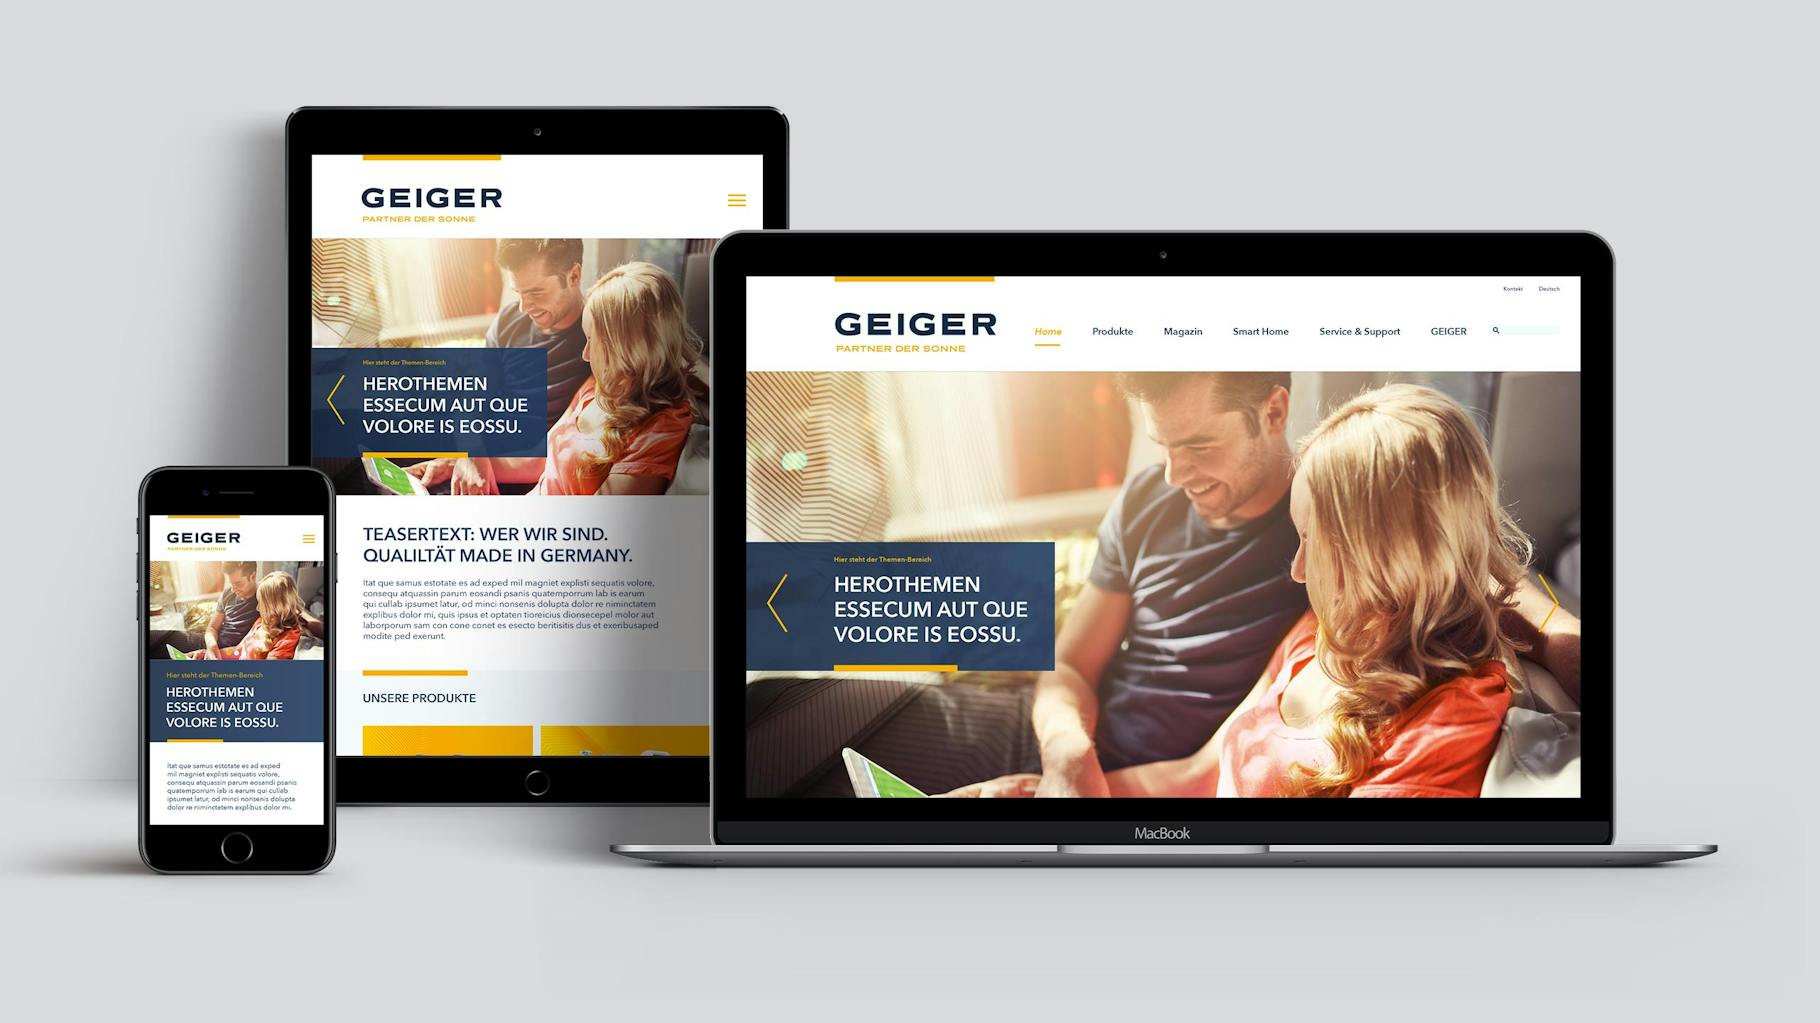 The responsive website of Geiger